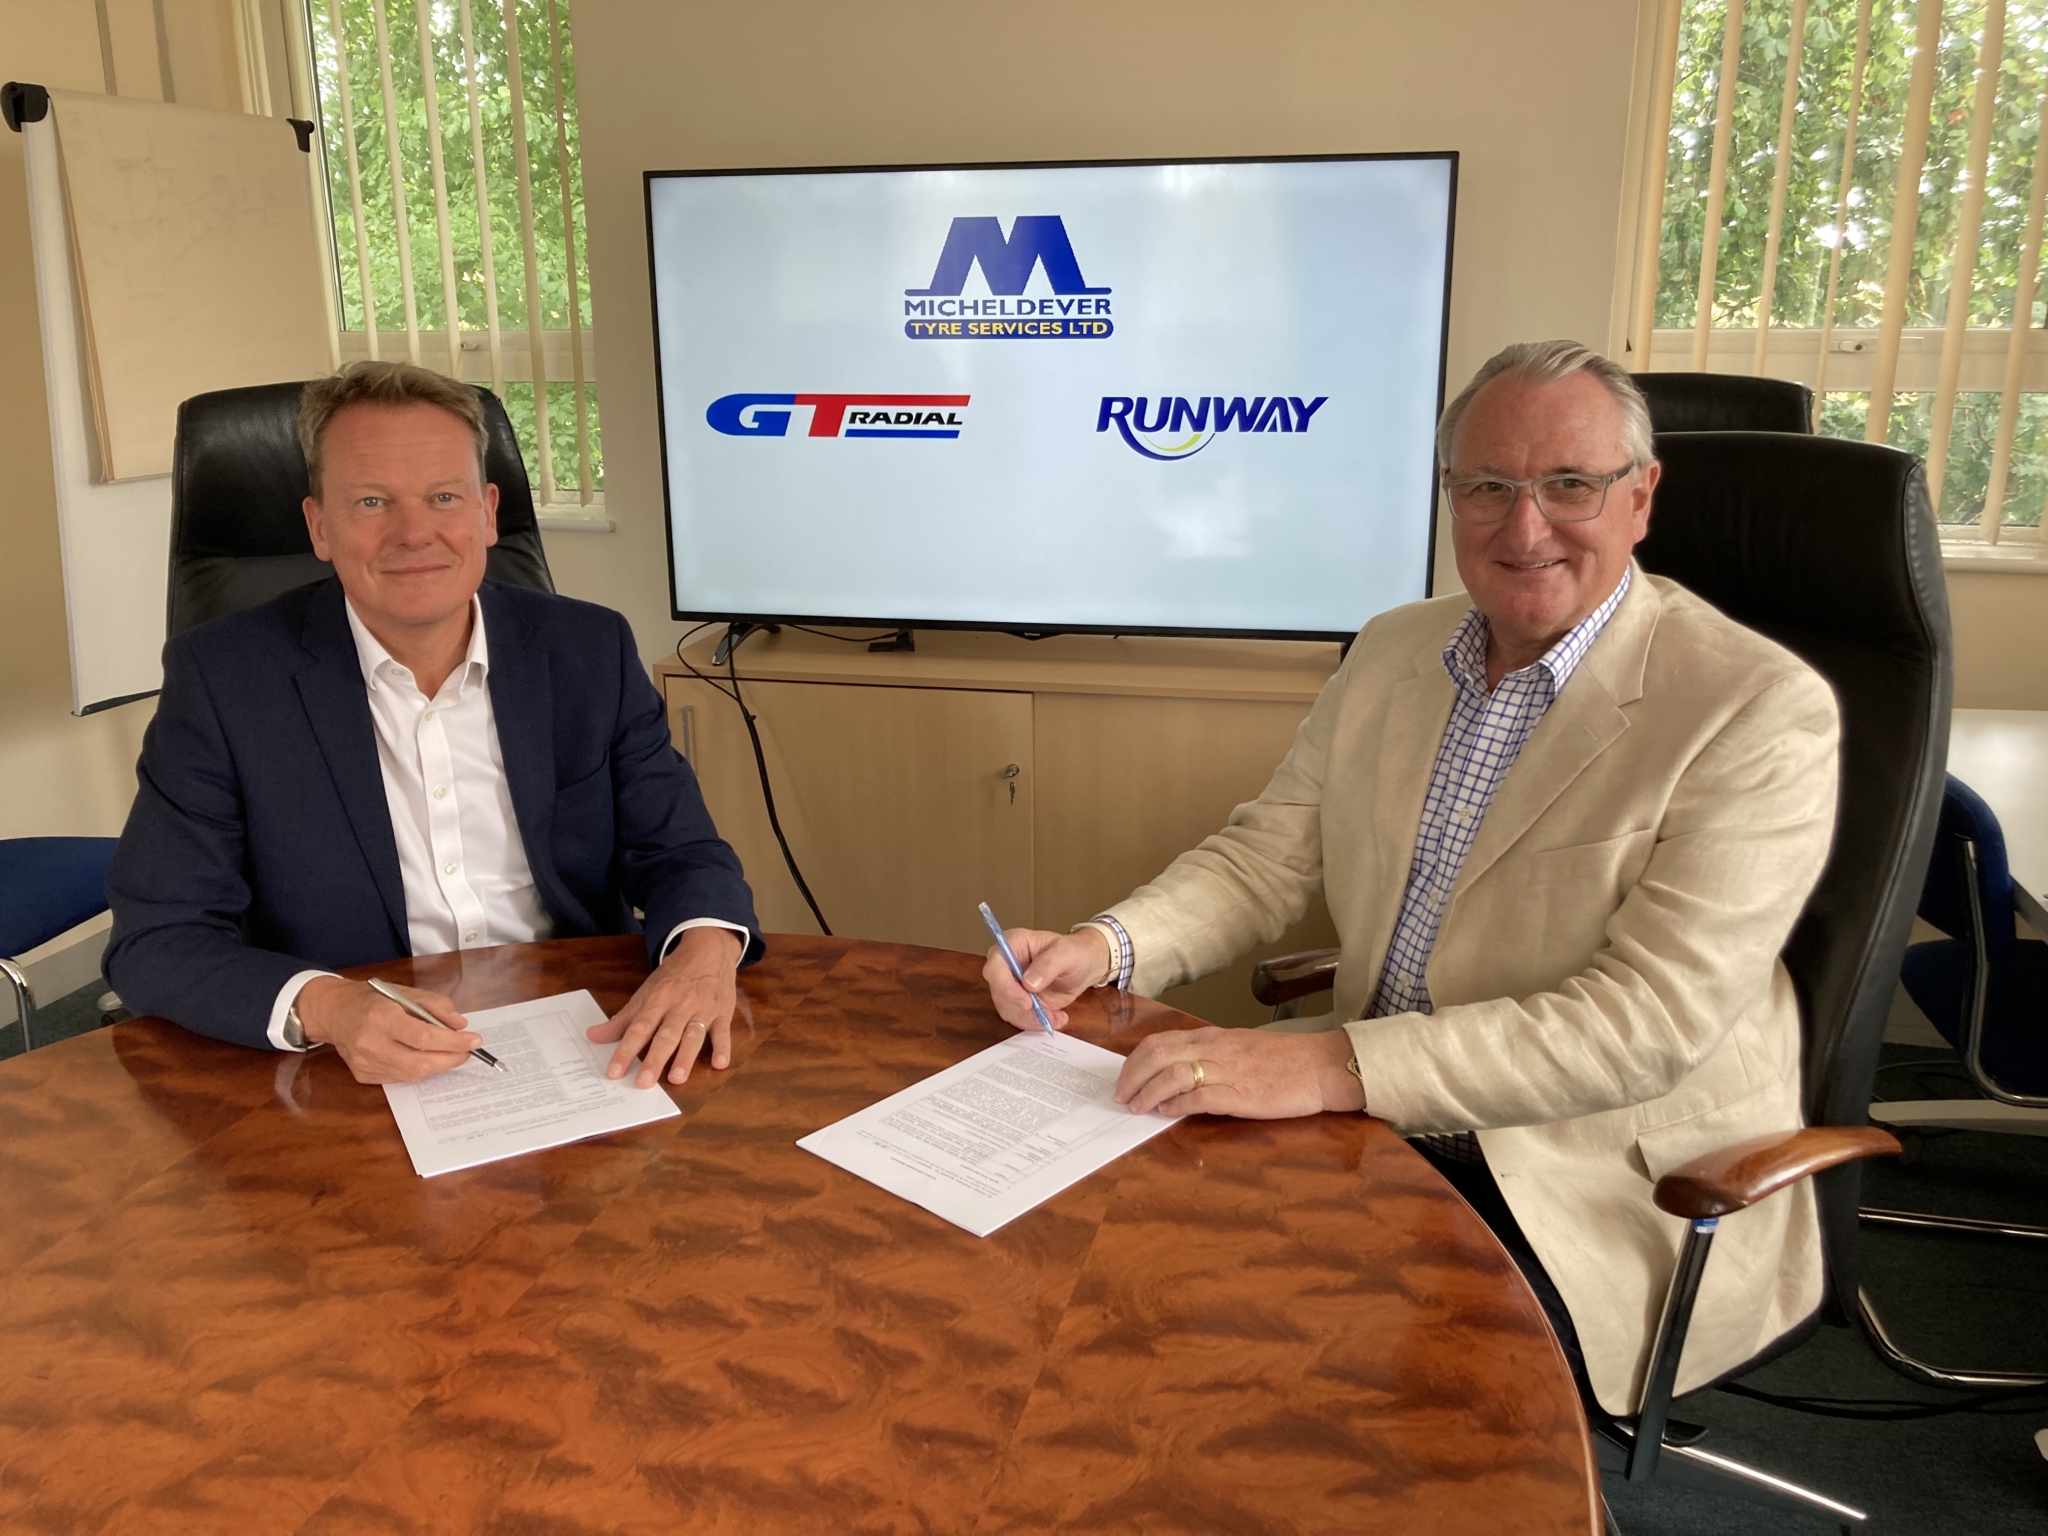 Micheldever renews GT Radial, Runway tyre brand exclusive distribution agreement